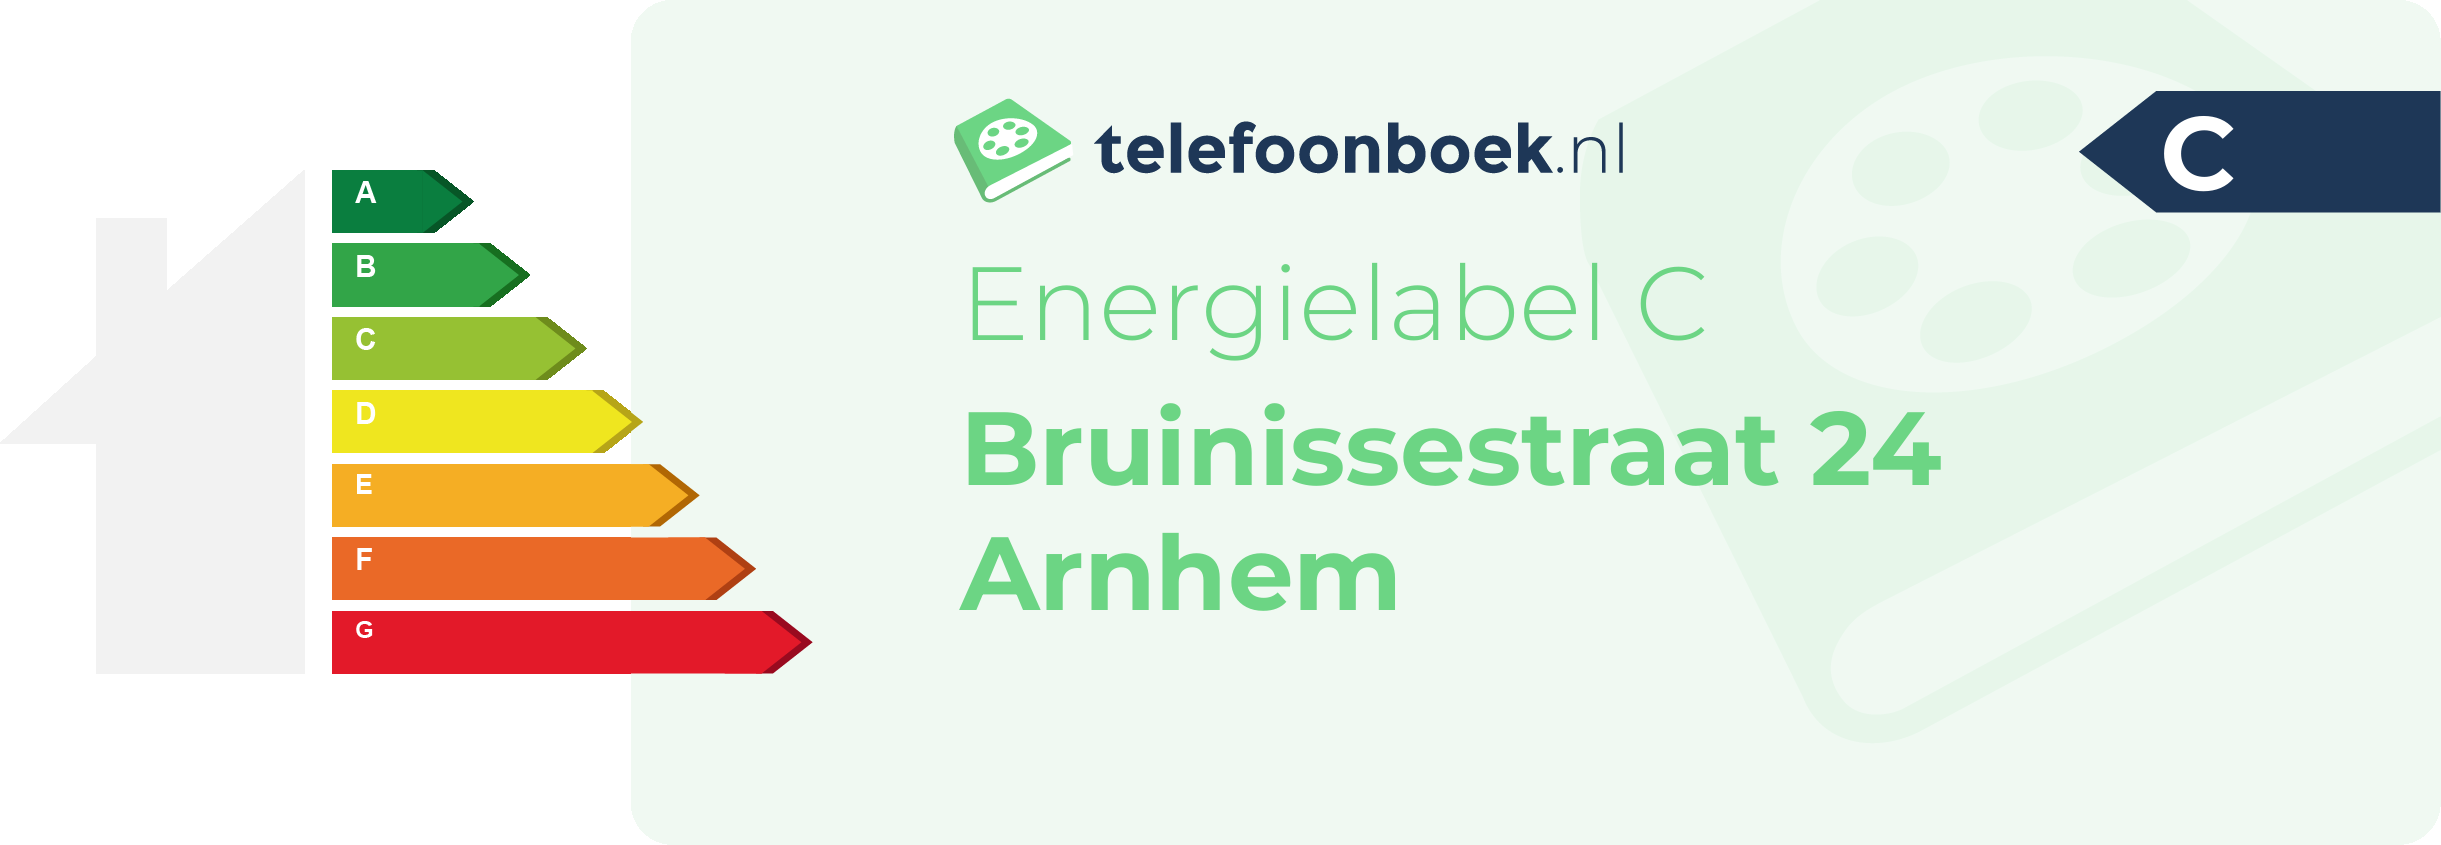 Energielabel Bruinissestraat 24 Arnhem